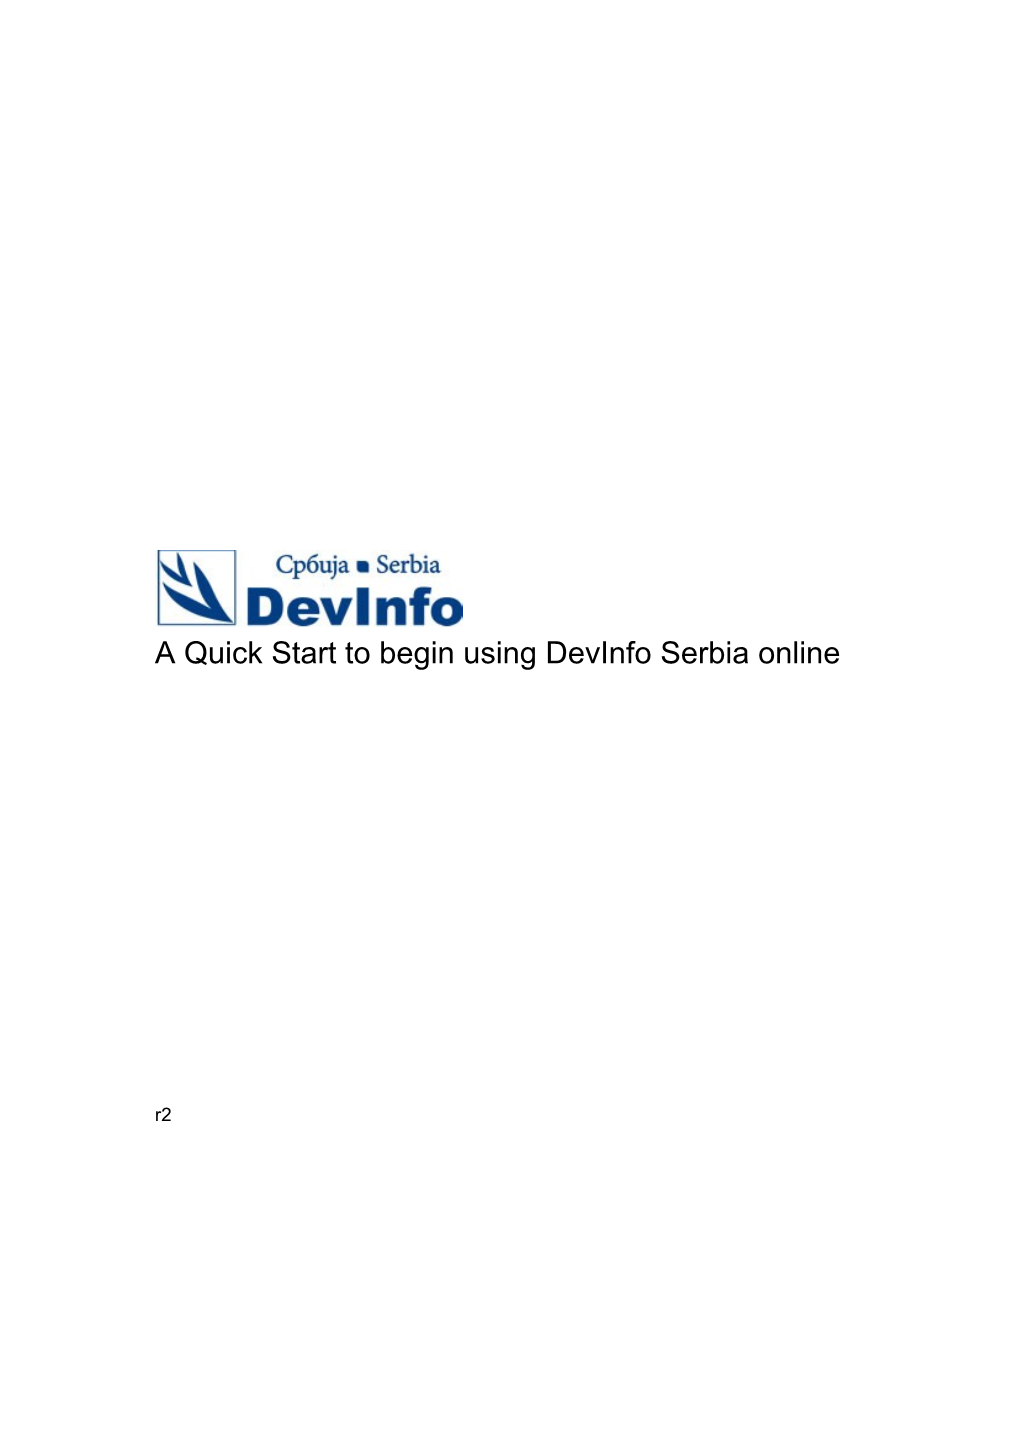 Devinfo Serbia Online